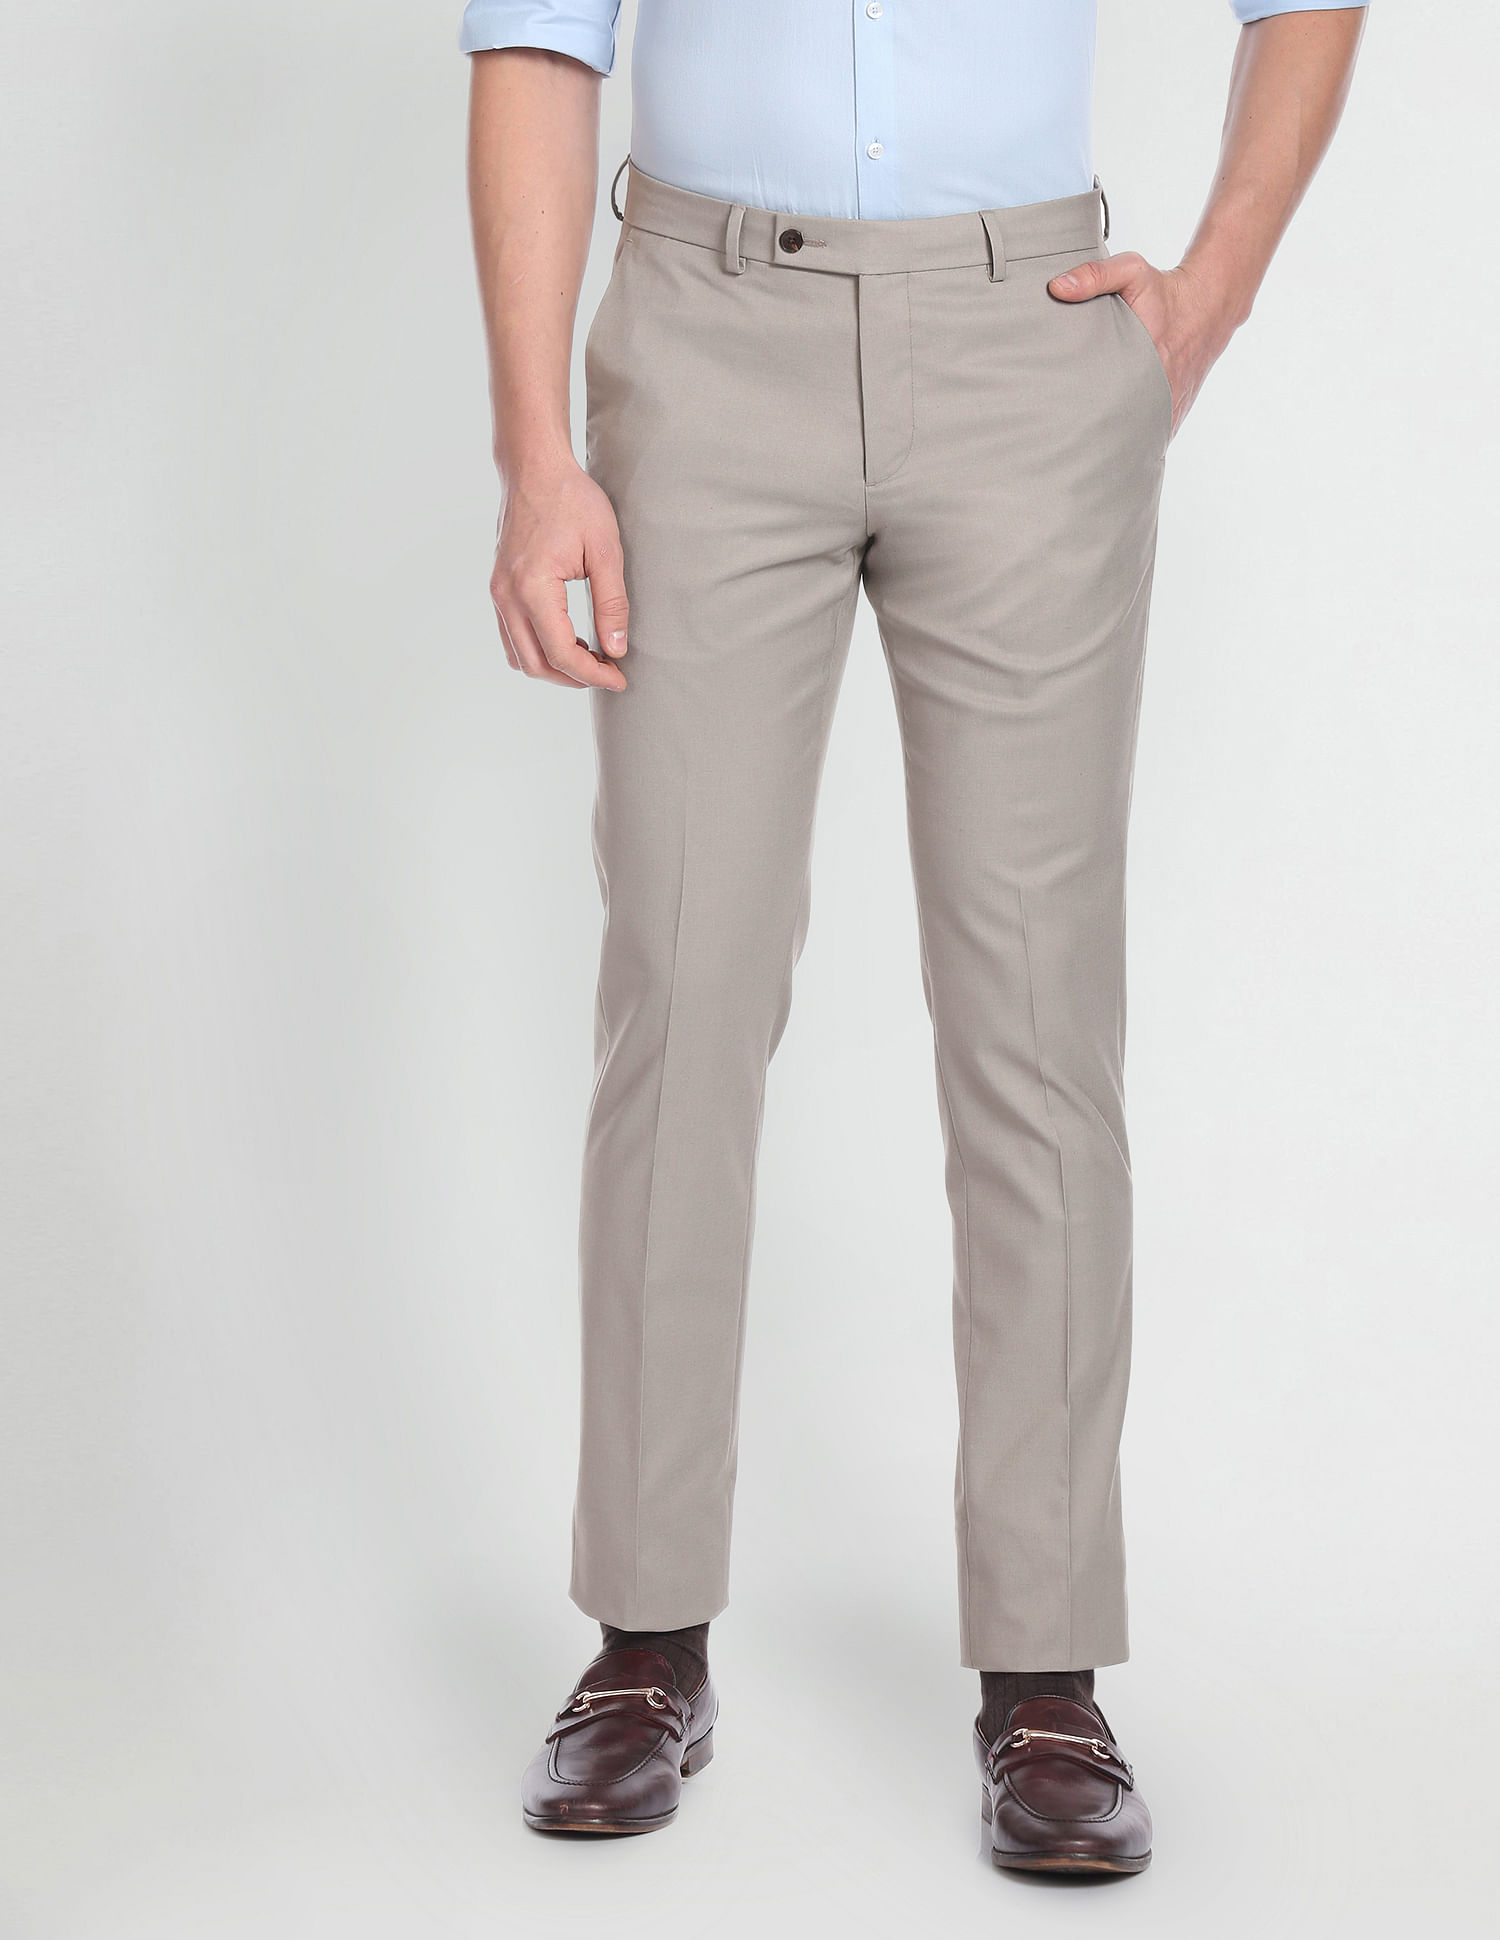 ARROW Slim Fit Men Brown Trousers - Buy ARROW Slim Fit Men Brown Trousers  Online at Best Prices in India | Flipkart.com